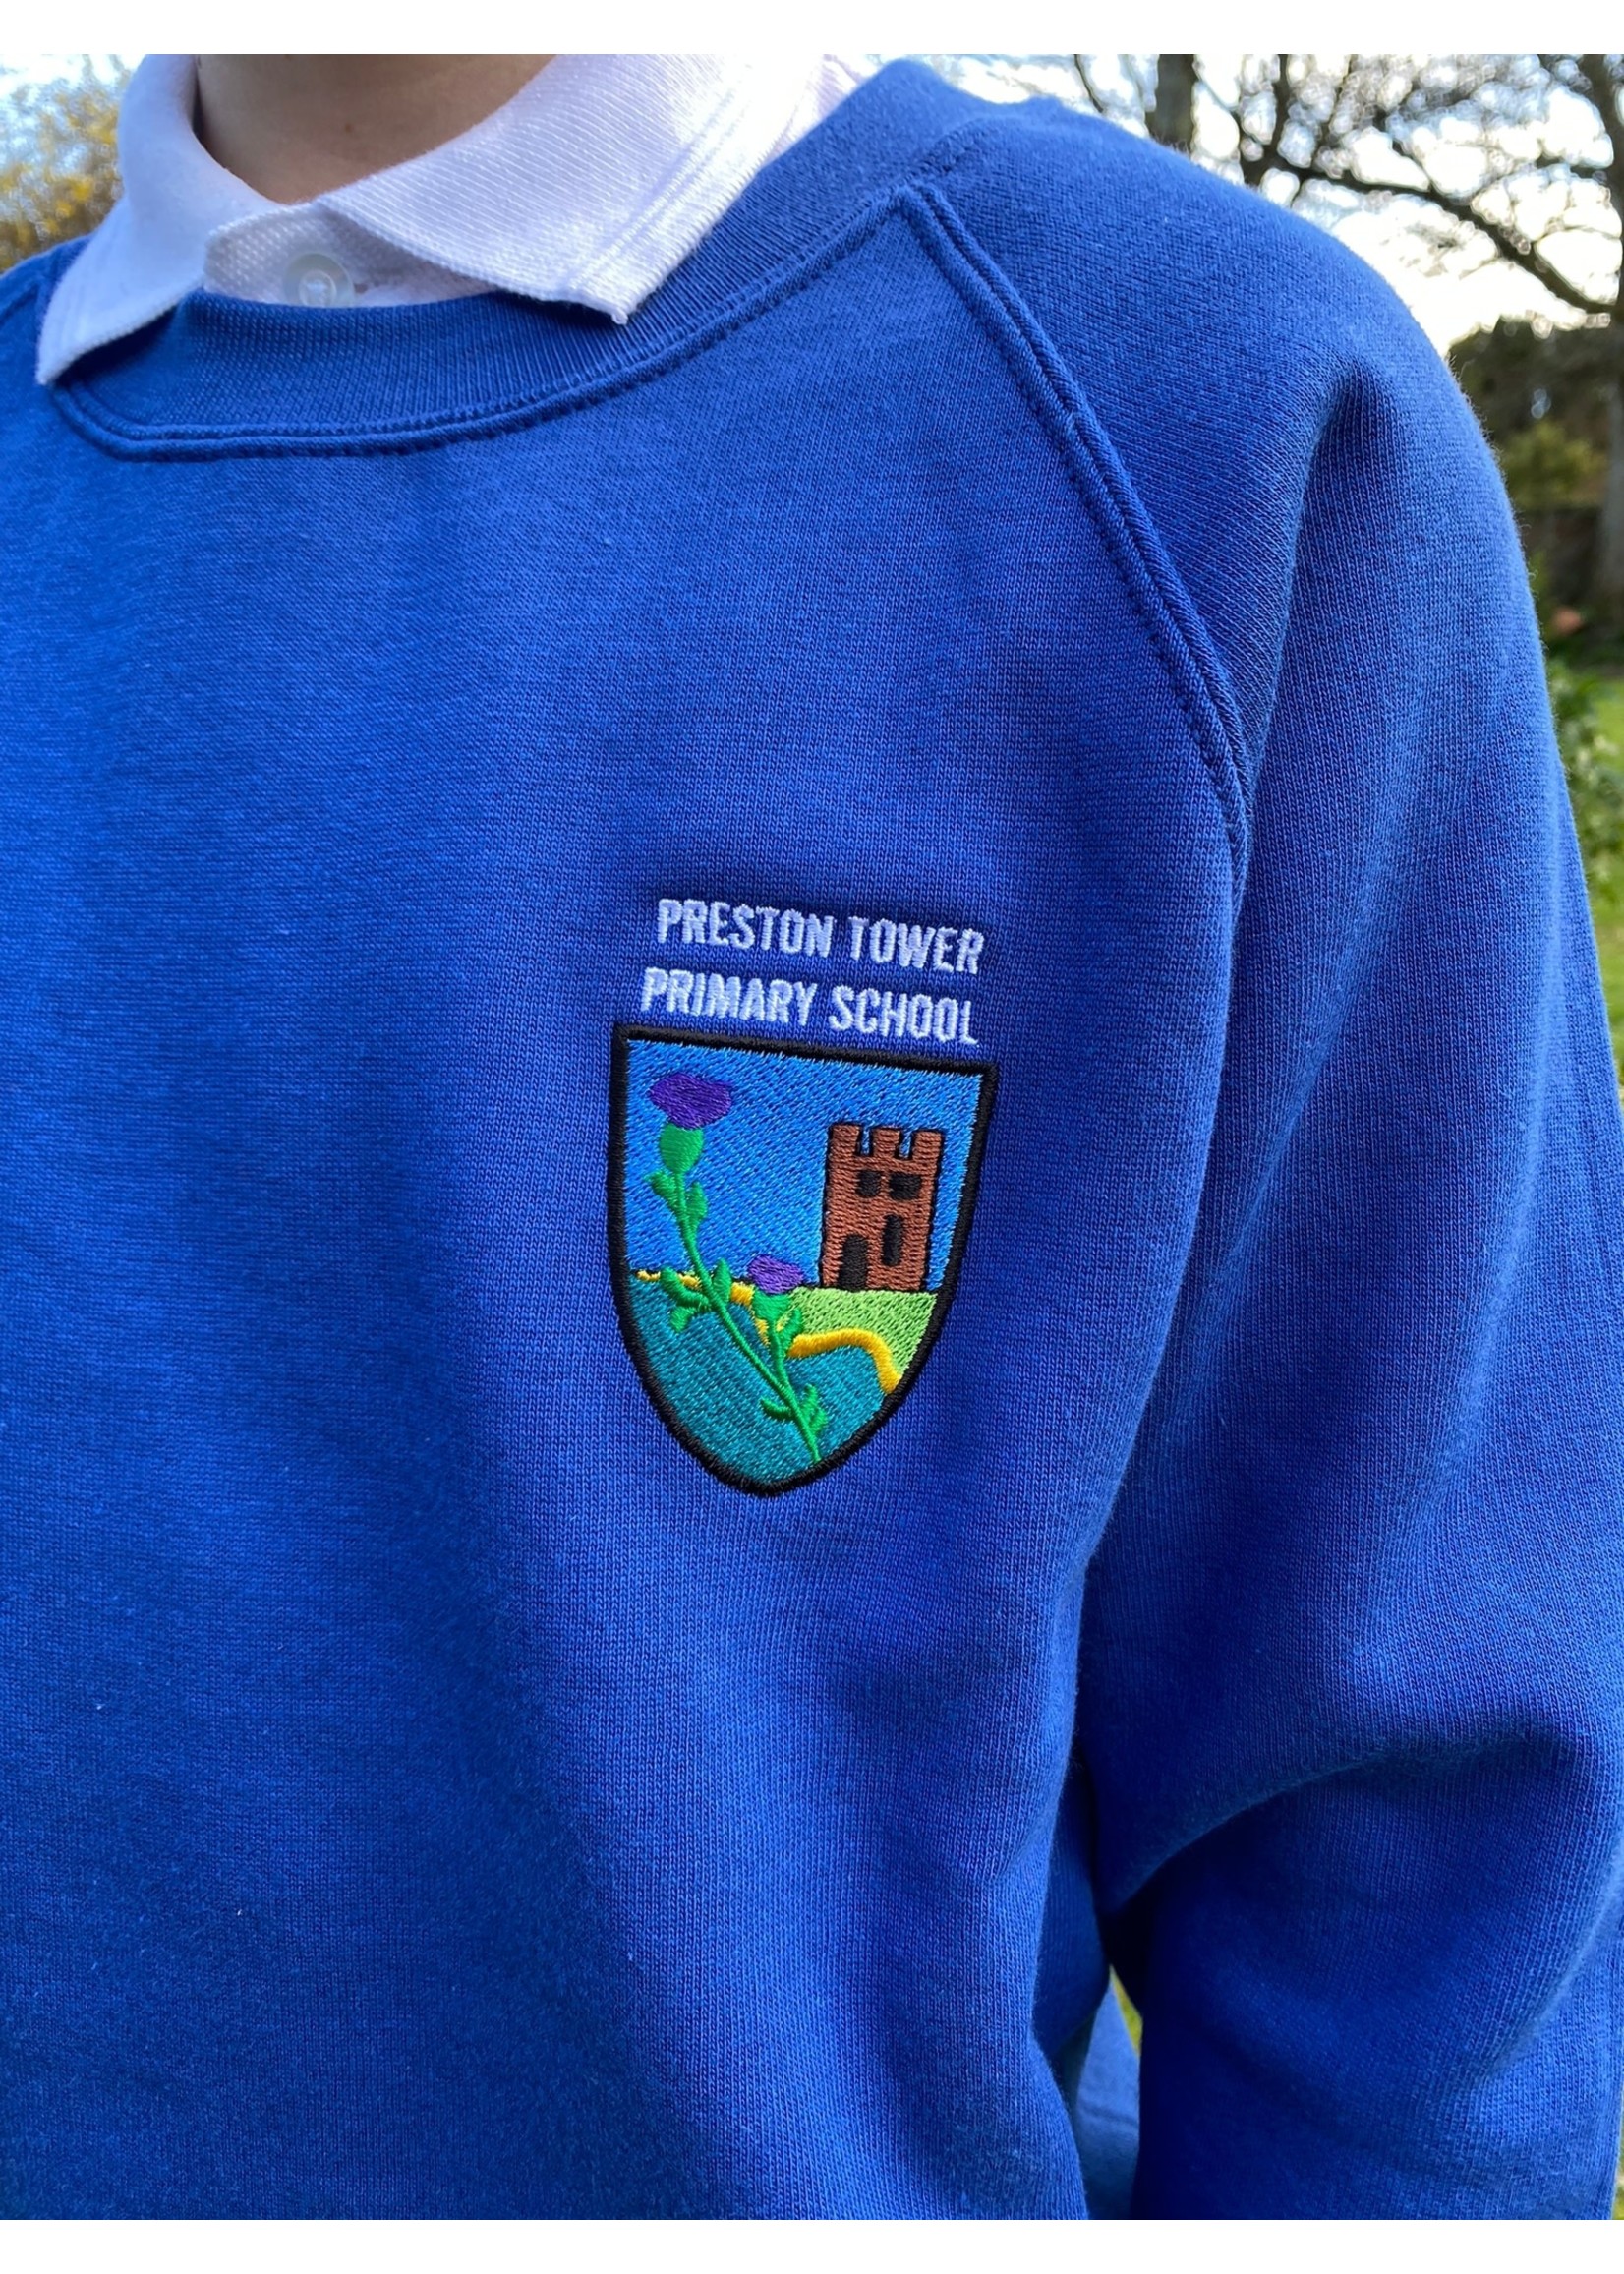 School Uniform - SWEATSHIRT - PRESTON TOWER